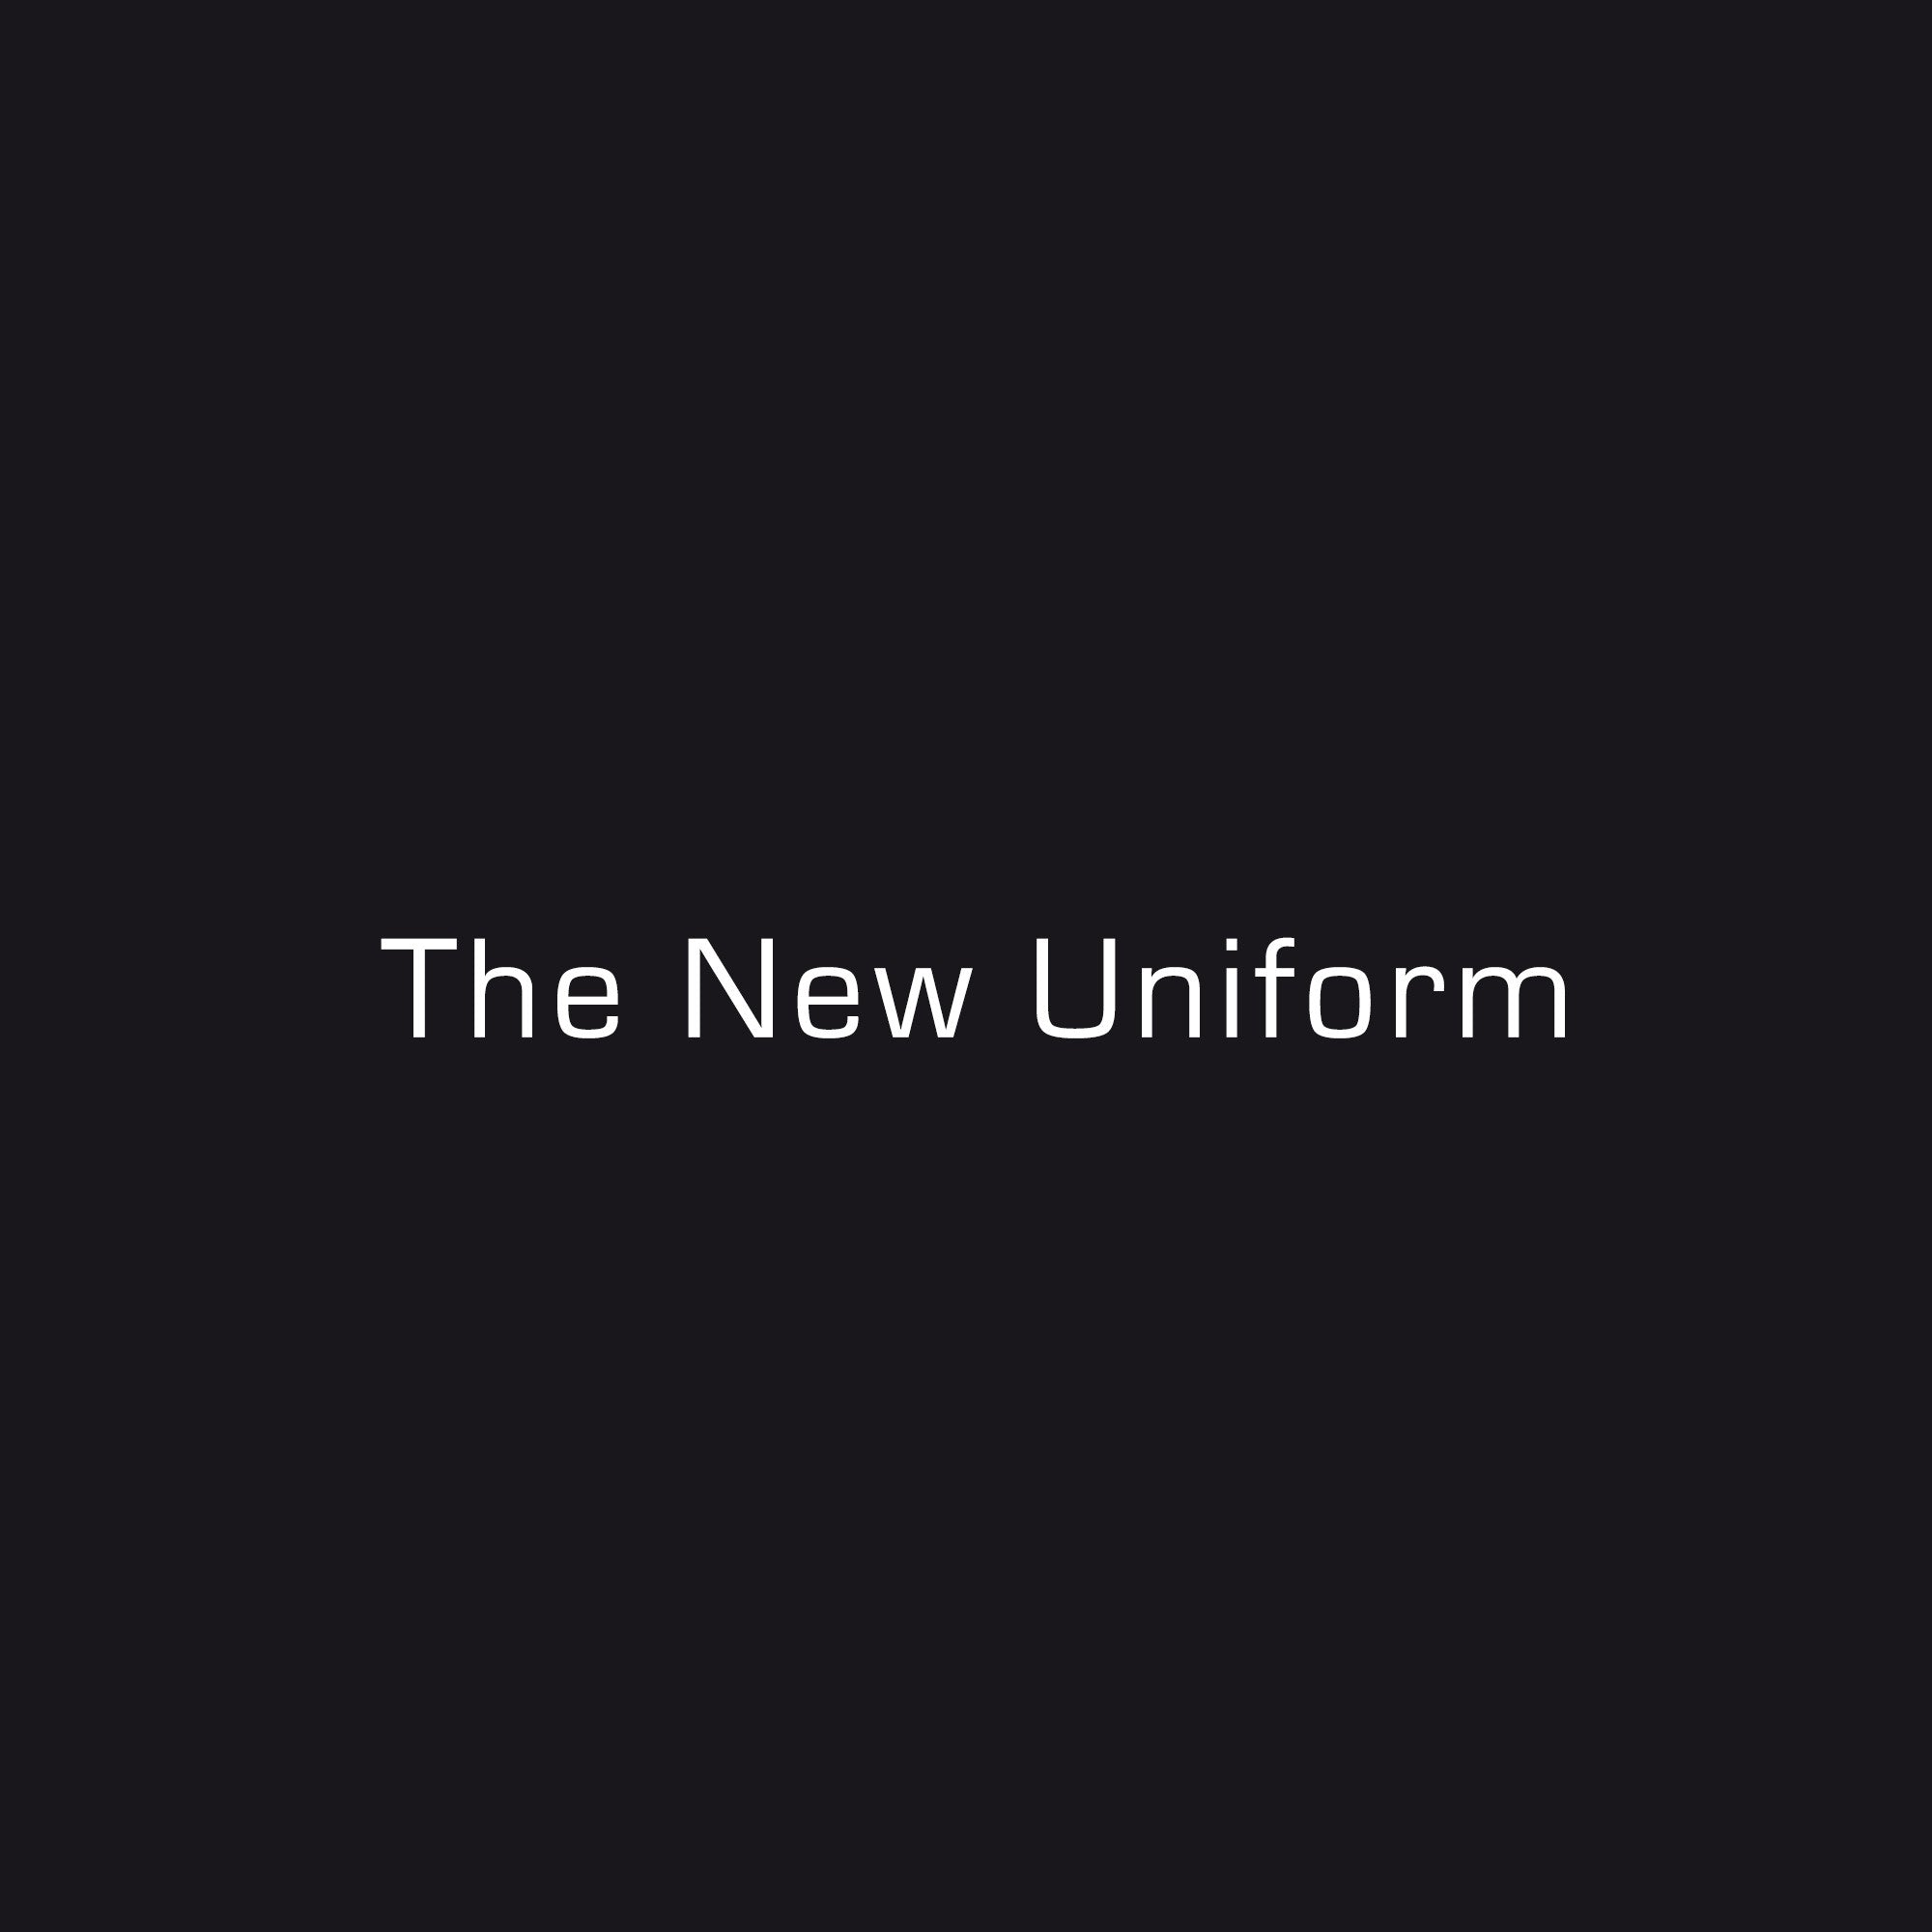 The New Uniform